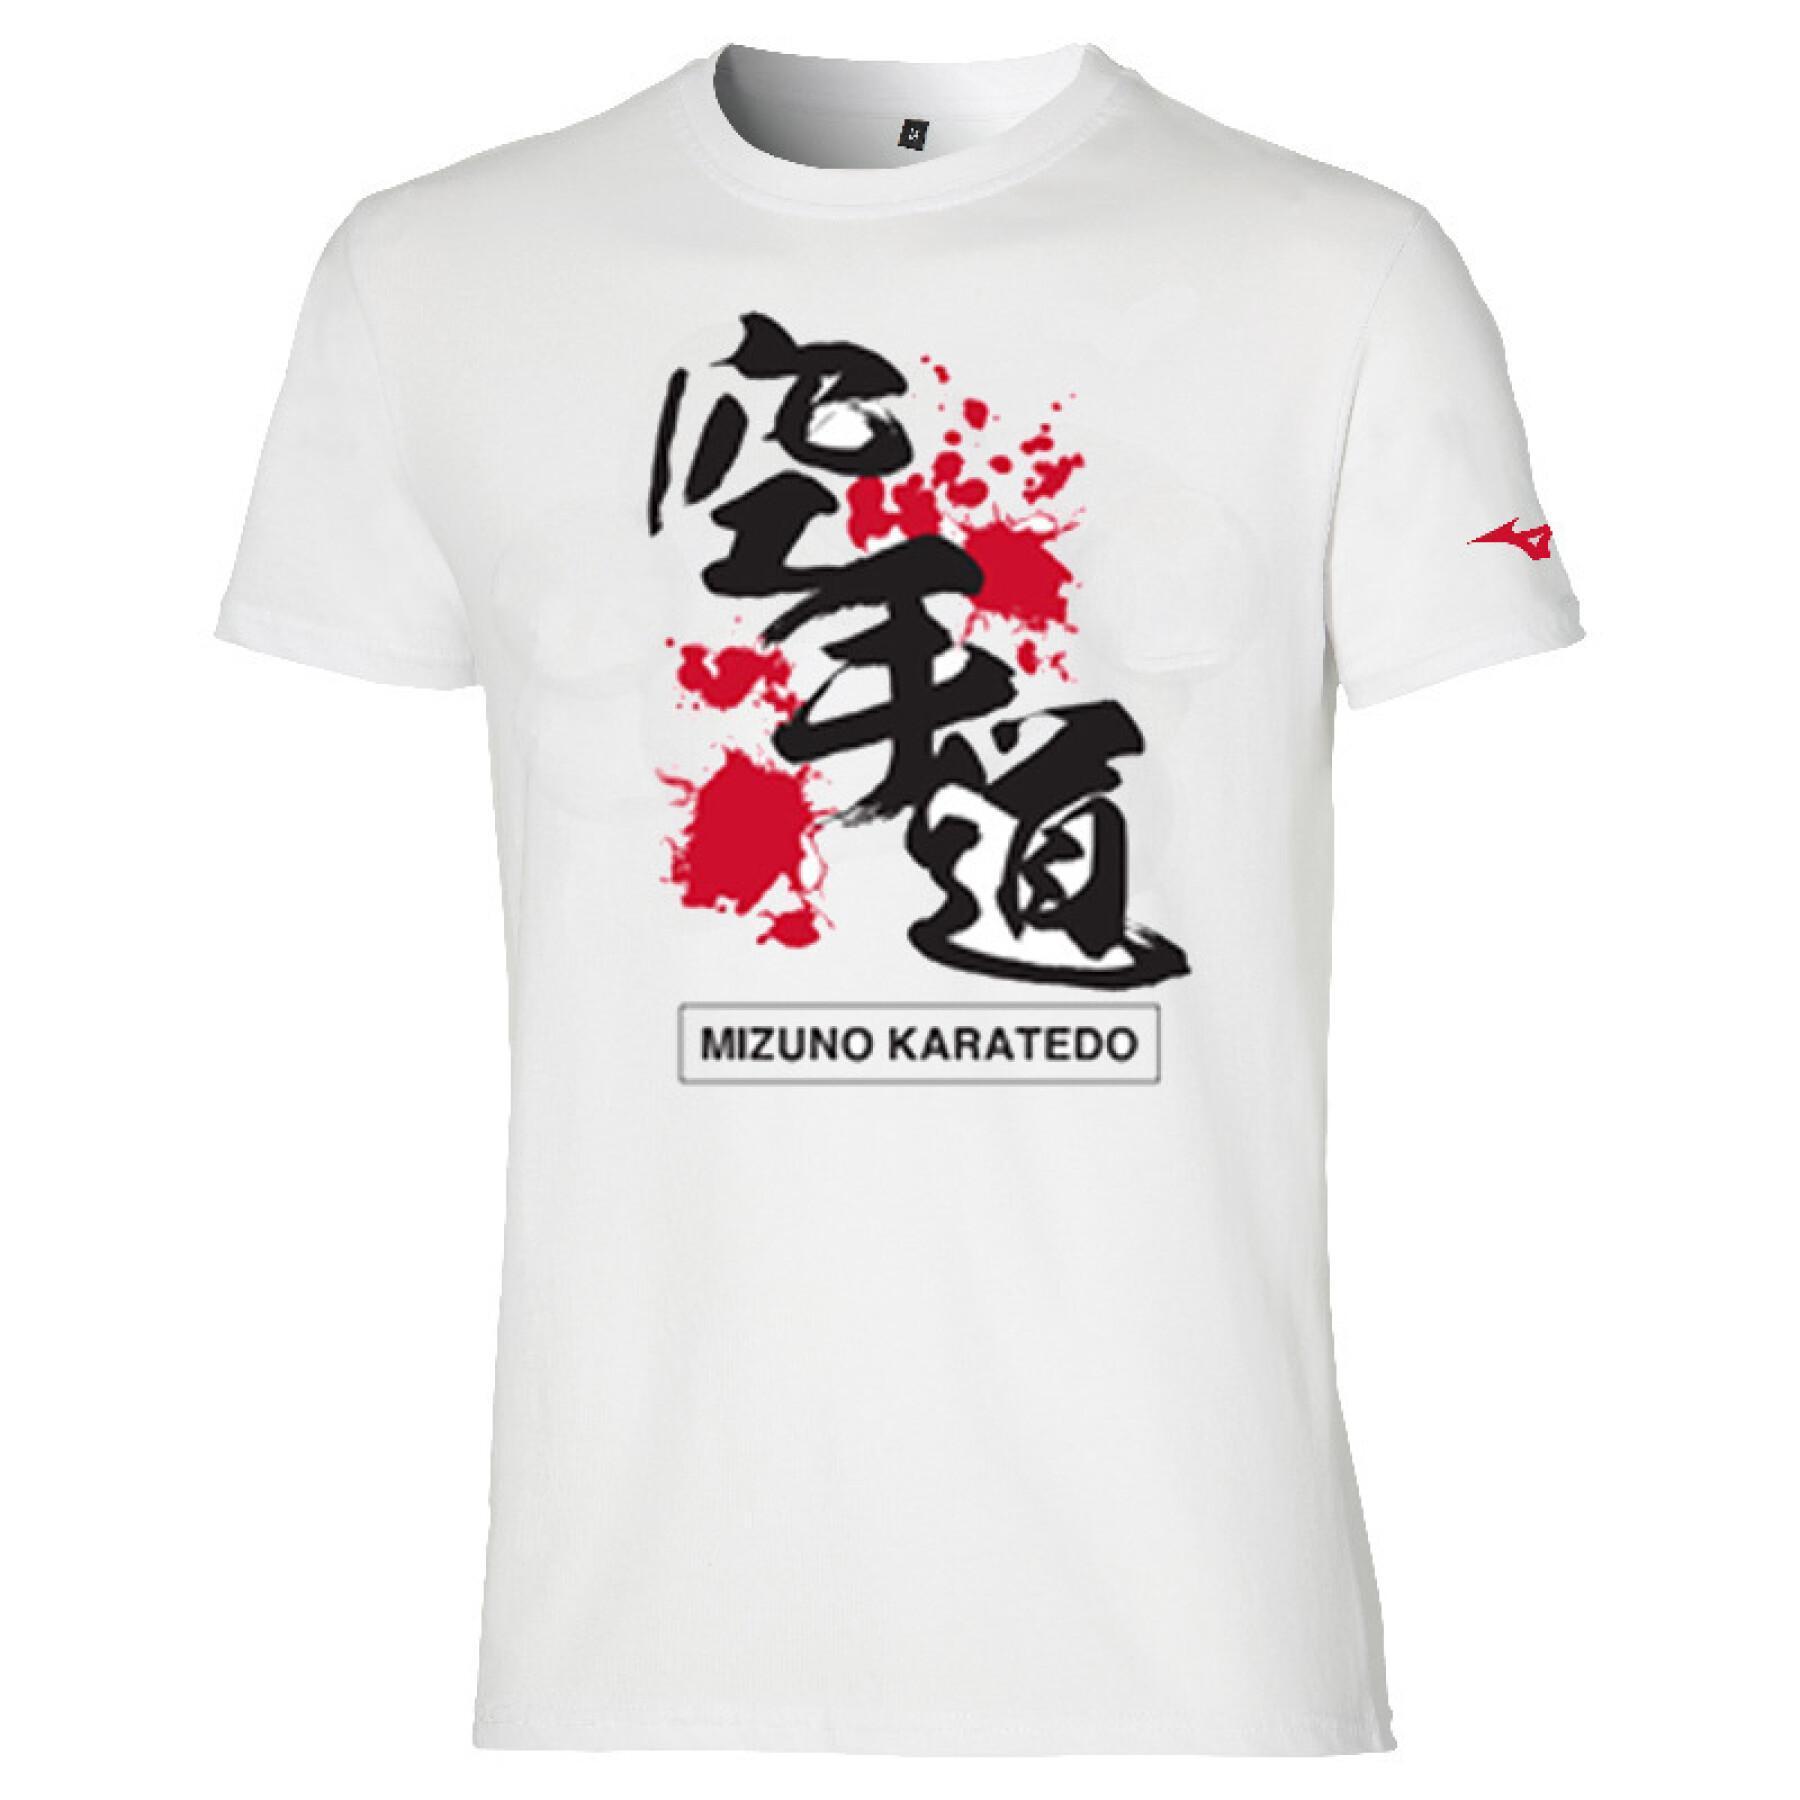 Camiseta de karate para niños Mizuno